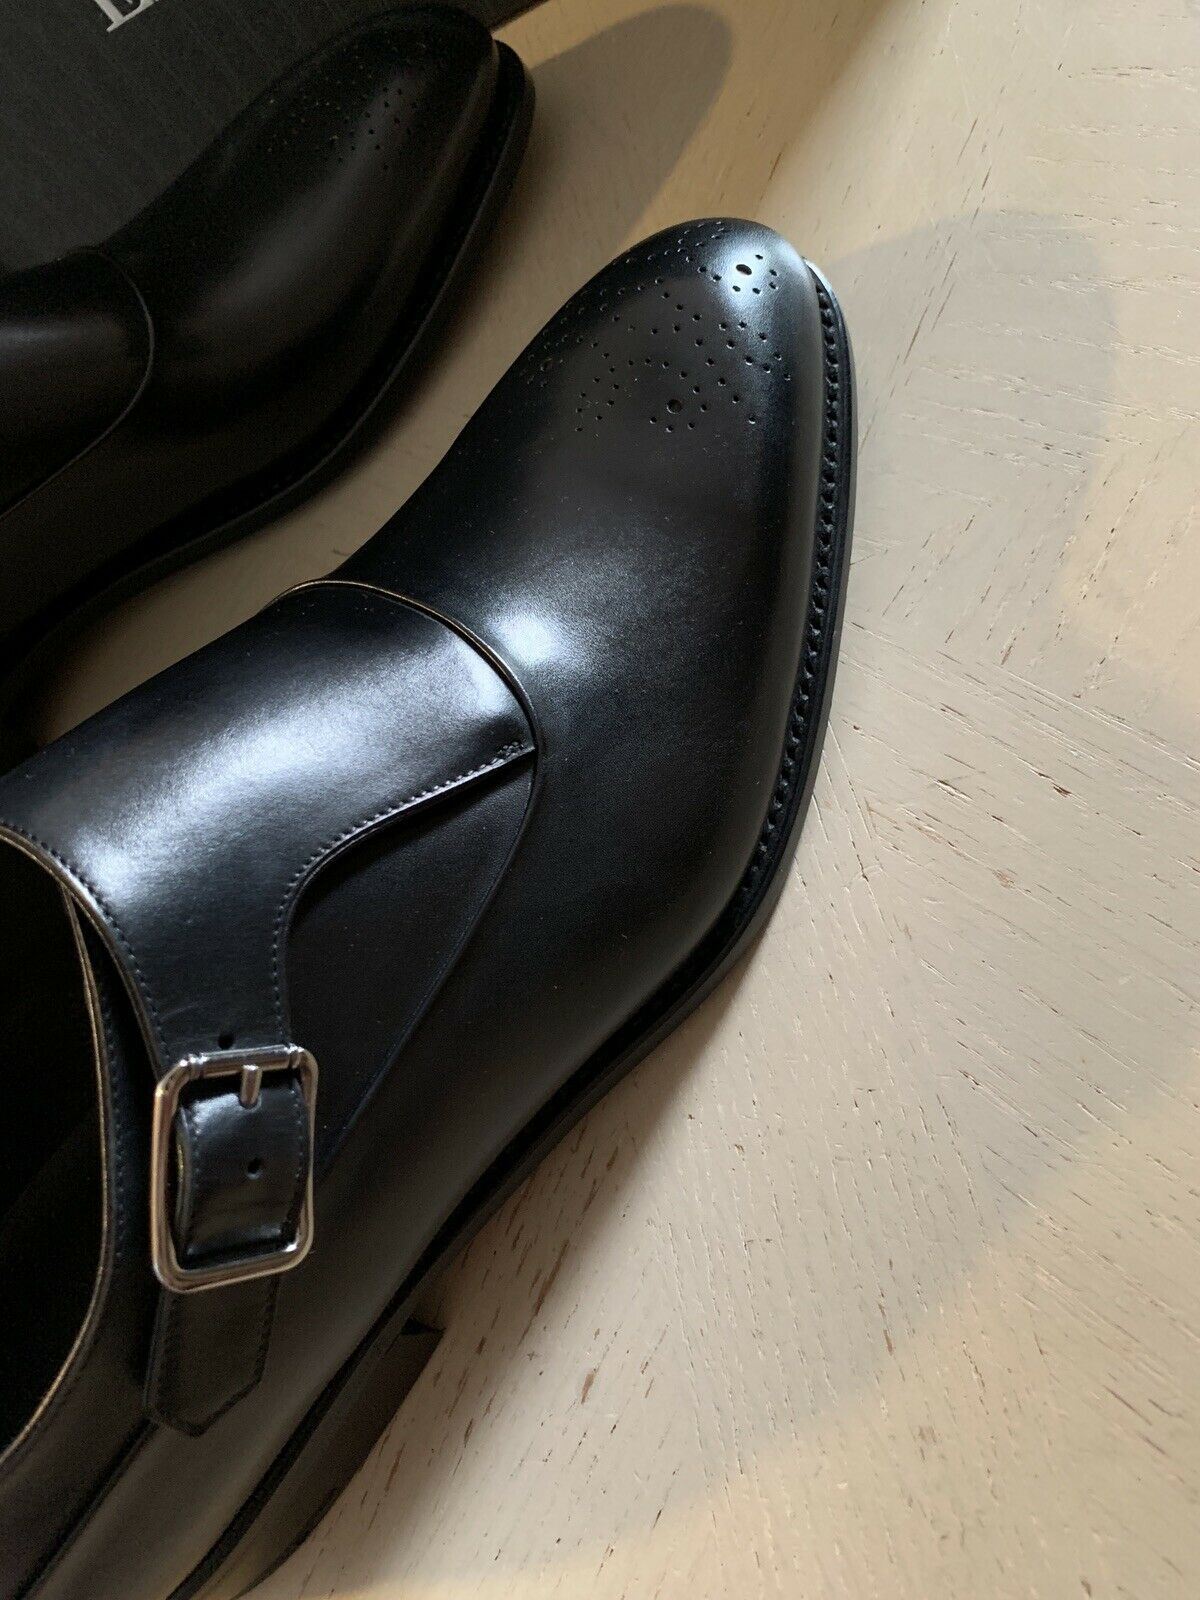 New $1350 Ermenegildo Zegna Couture Monk Brogues Leather Shoes Black 11.5 US Ita